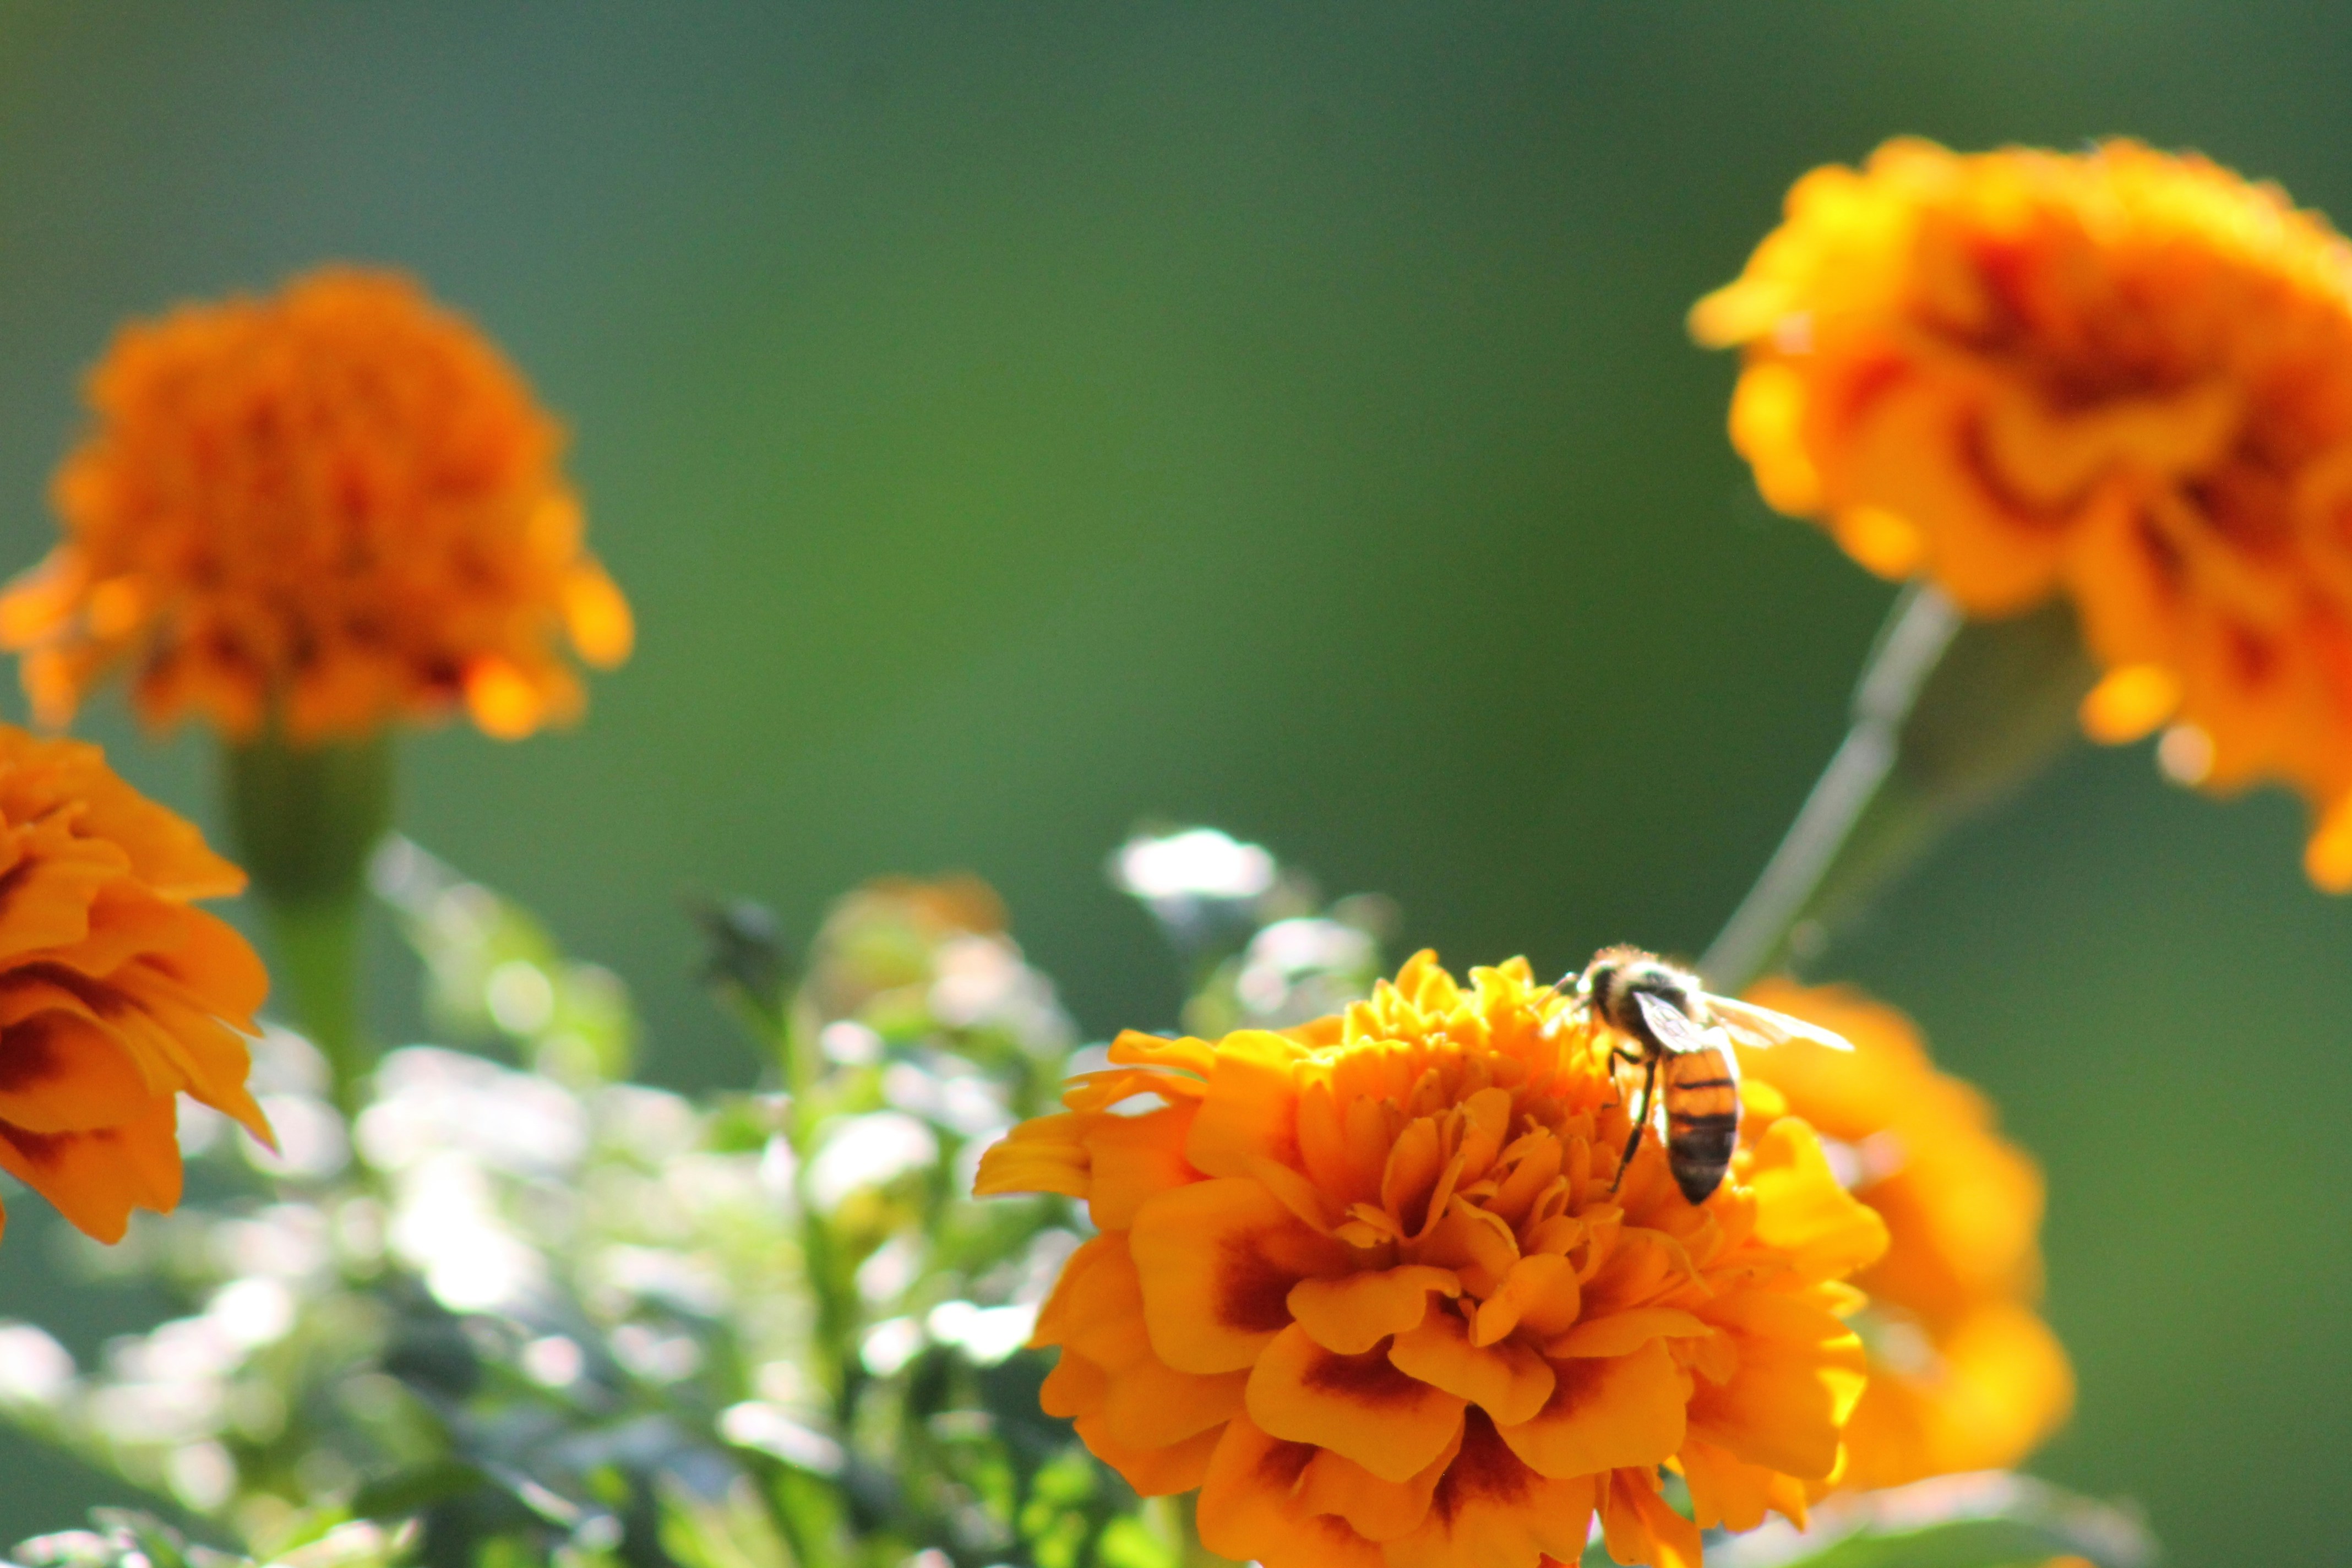 Vibrant orange marigold flowers with honeybee pollinating in a sunny garden